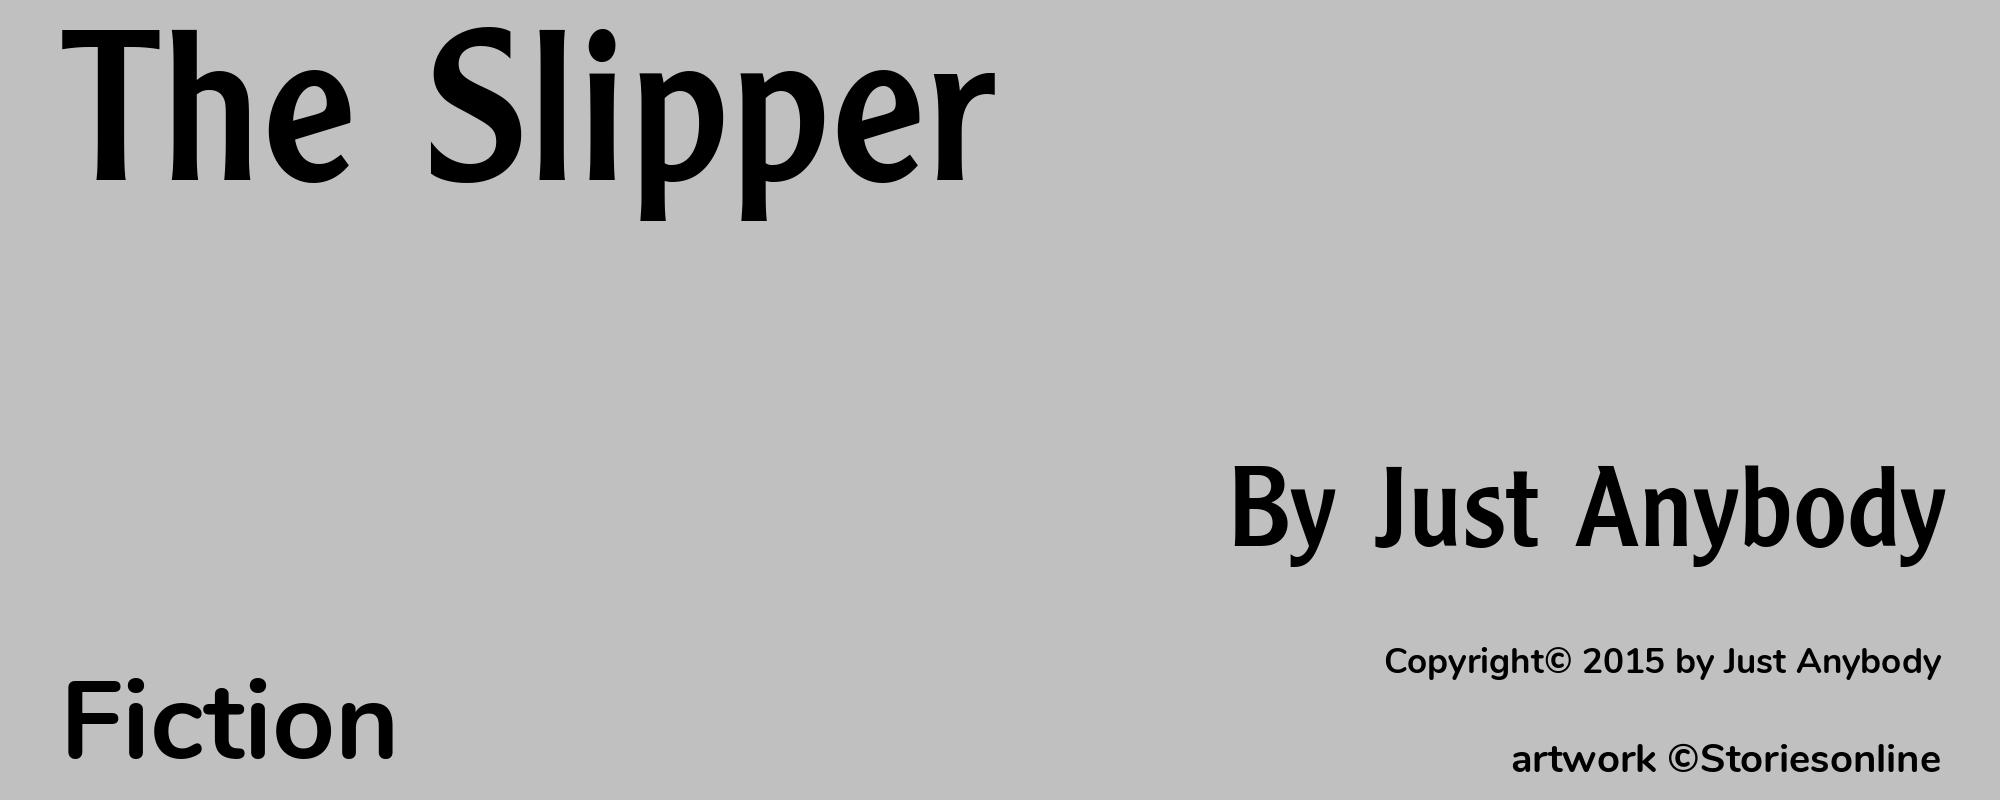 The Slipper - Cover